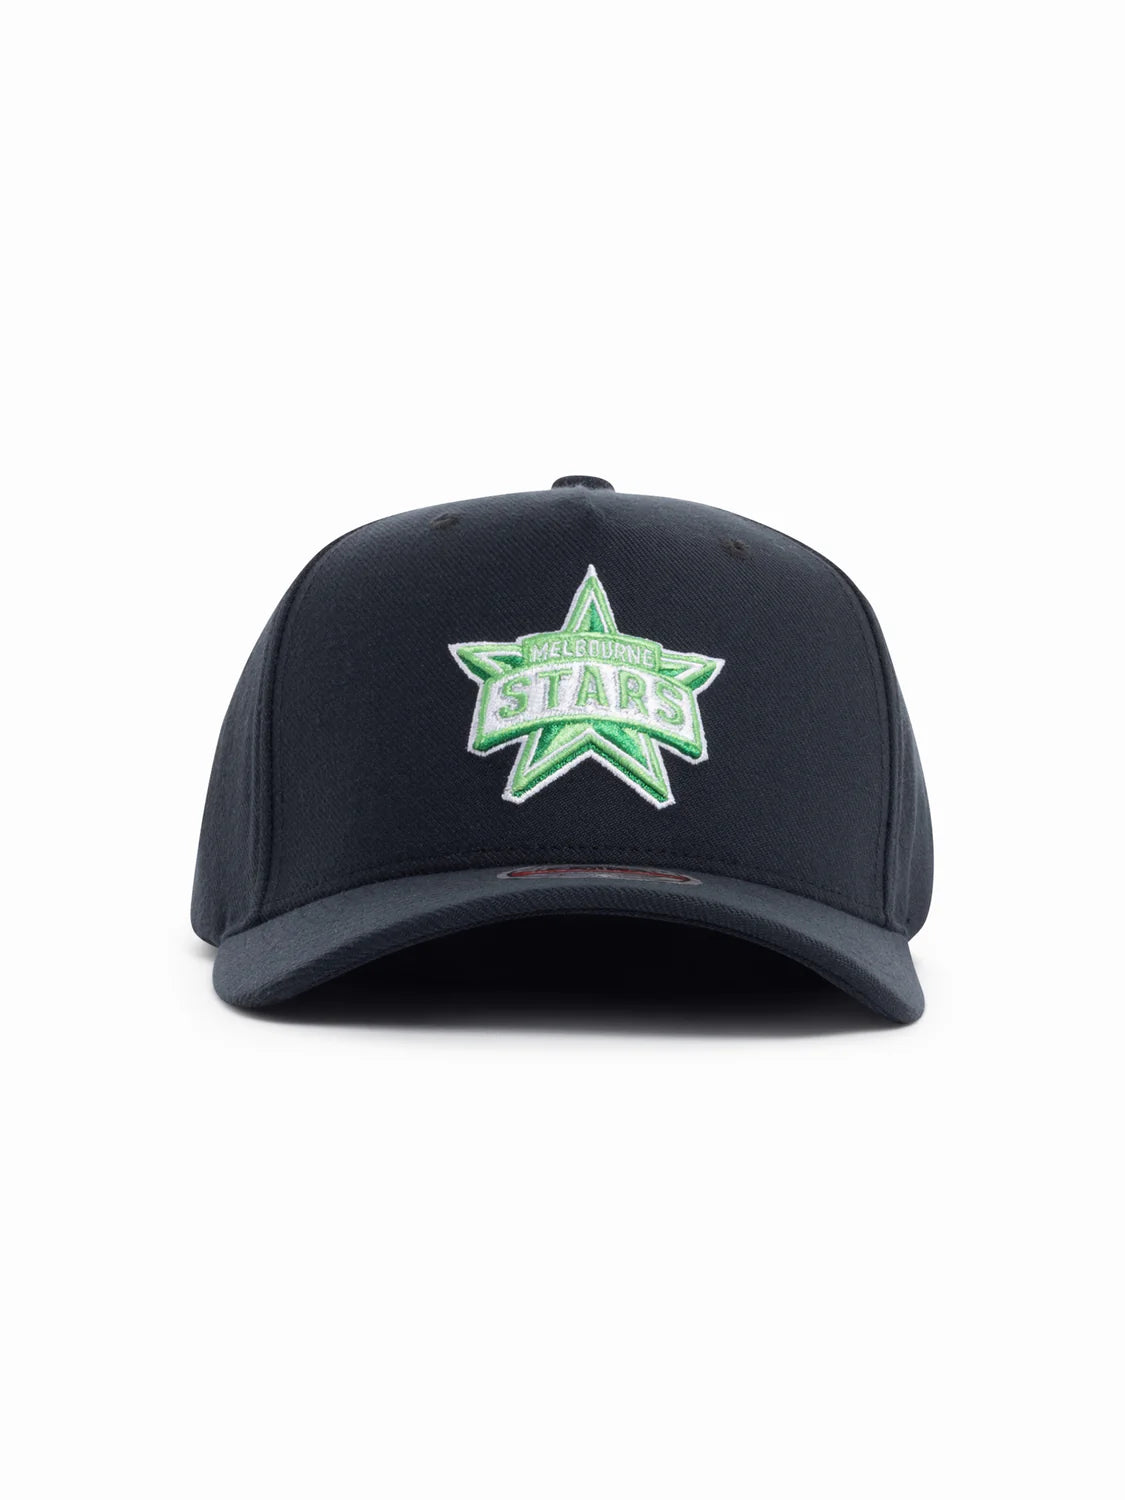 Melbourne Stars Hat - BBL Black Team Logo Classic Redline Snapback Cap - Mitchell & Ness